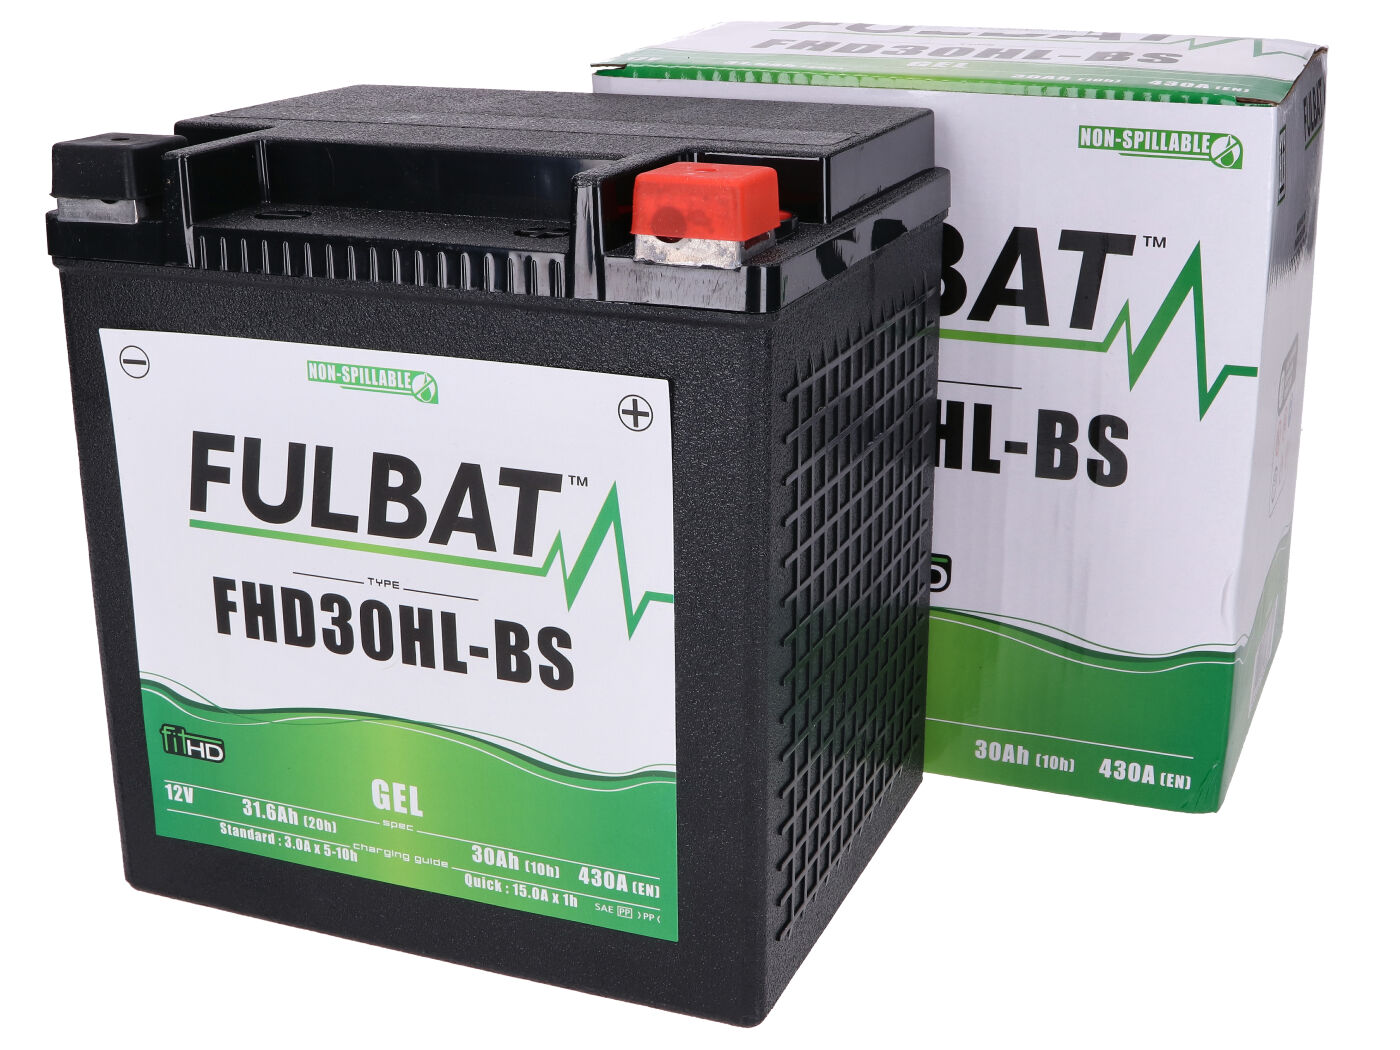 Fulbat FHD30HL-BS GEL Batterie für Harley